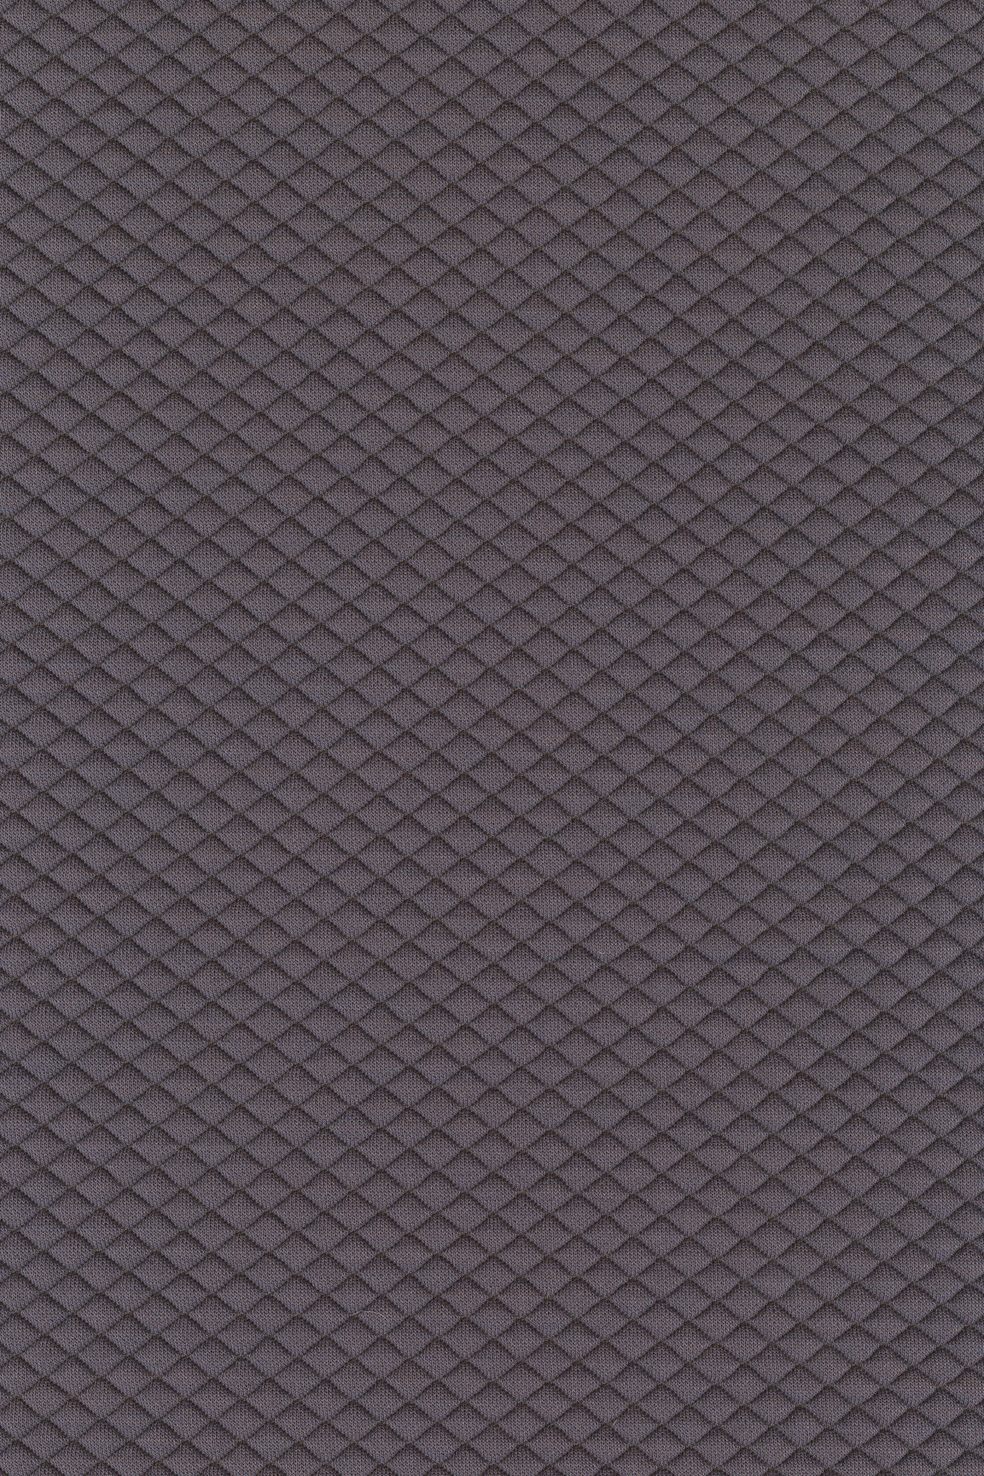 Fabric sample Mosaic 2 0642 purple